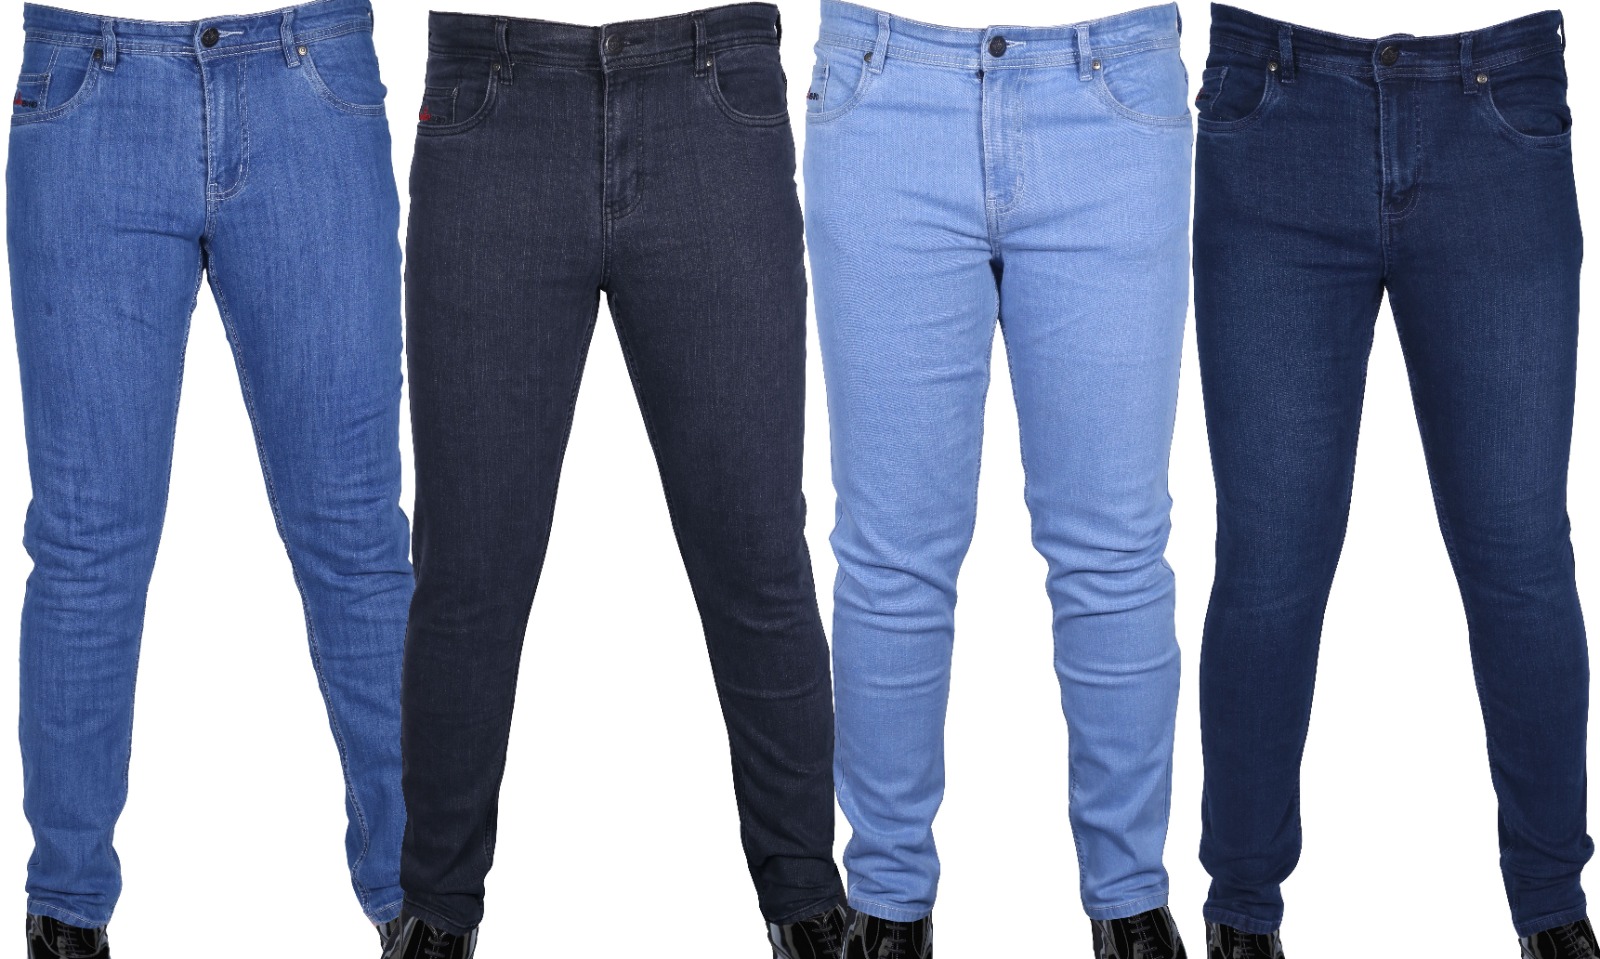 COTTON BOND Mens Jeans Straight Leg Slim Fit Heavy Denim Stretch Trousers Pants UK Sizes